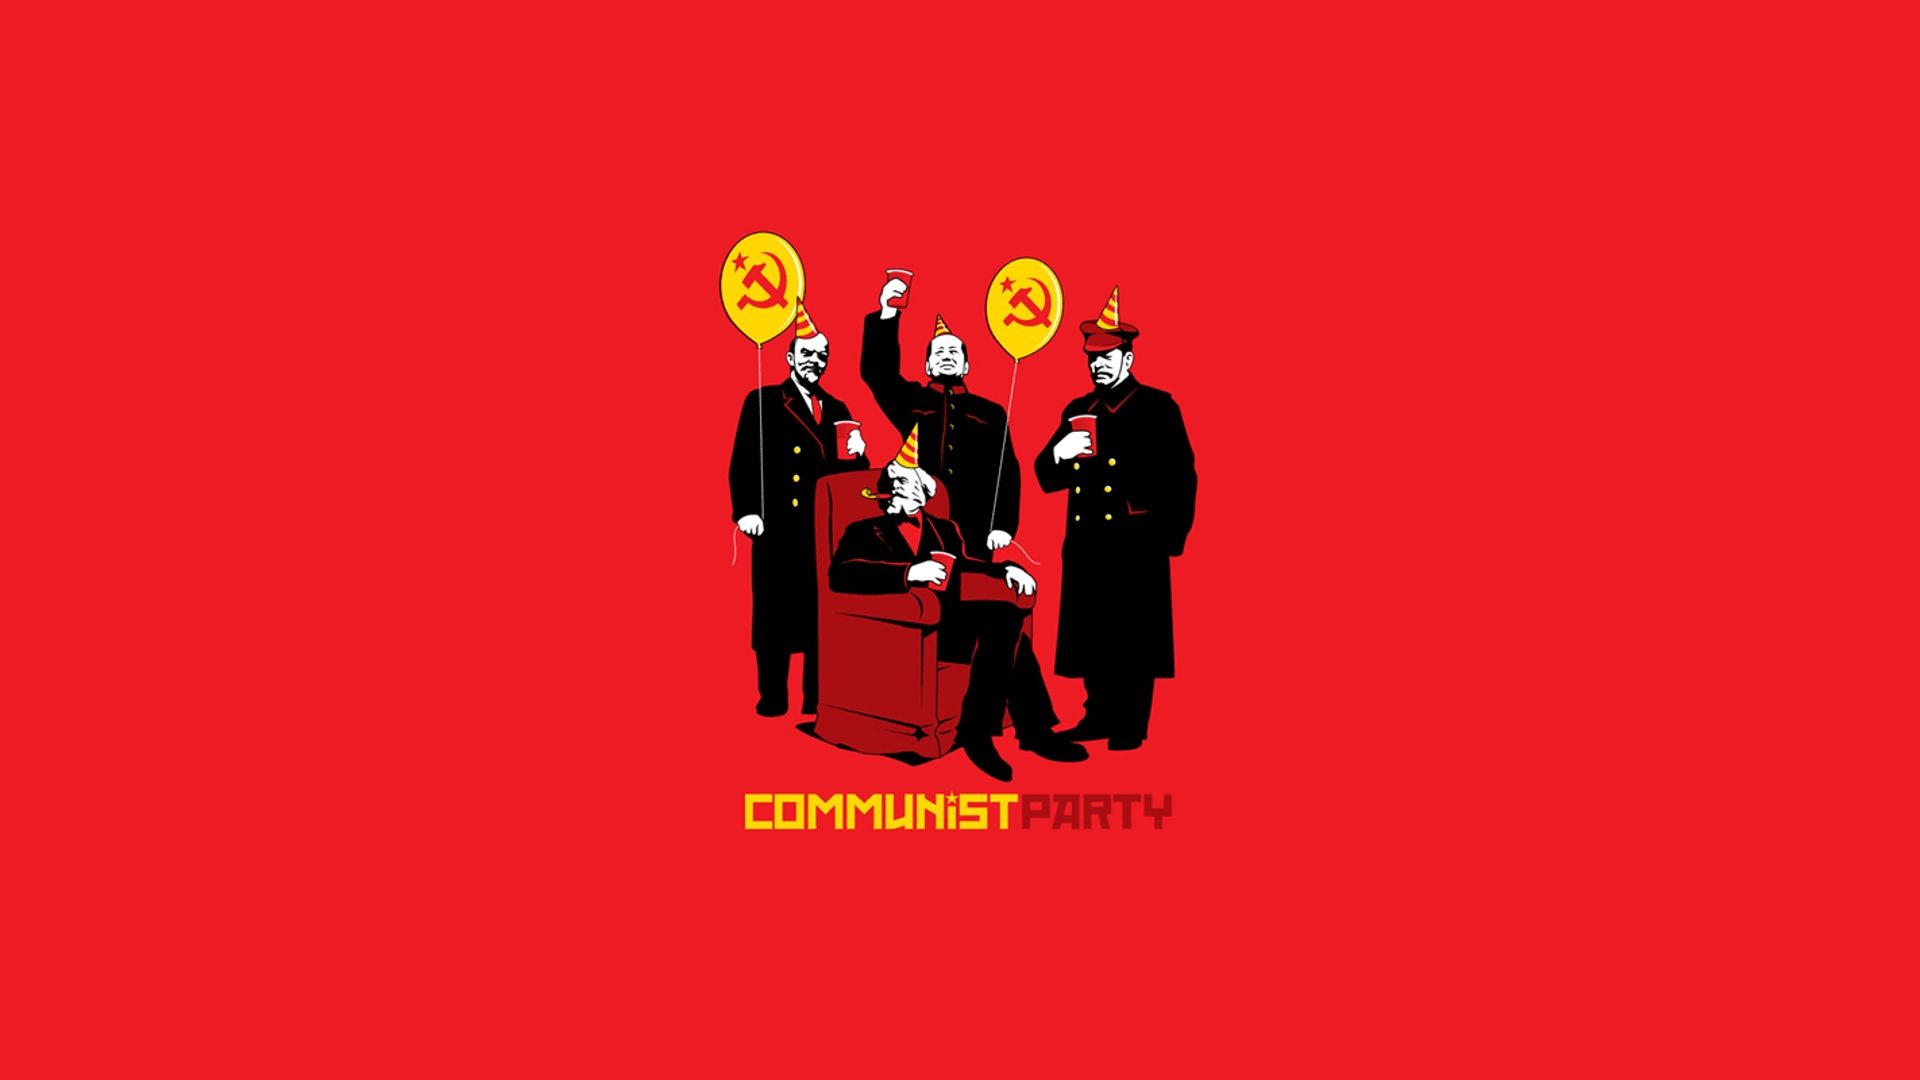 Communist Party (1920x1080)